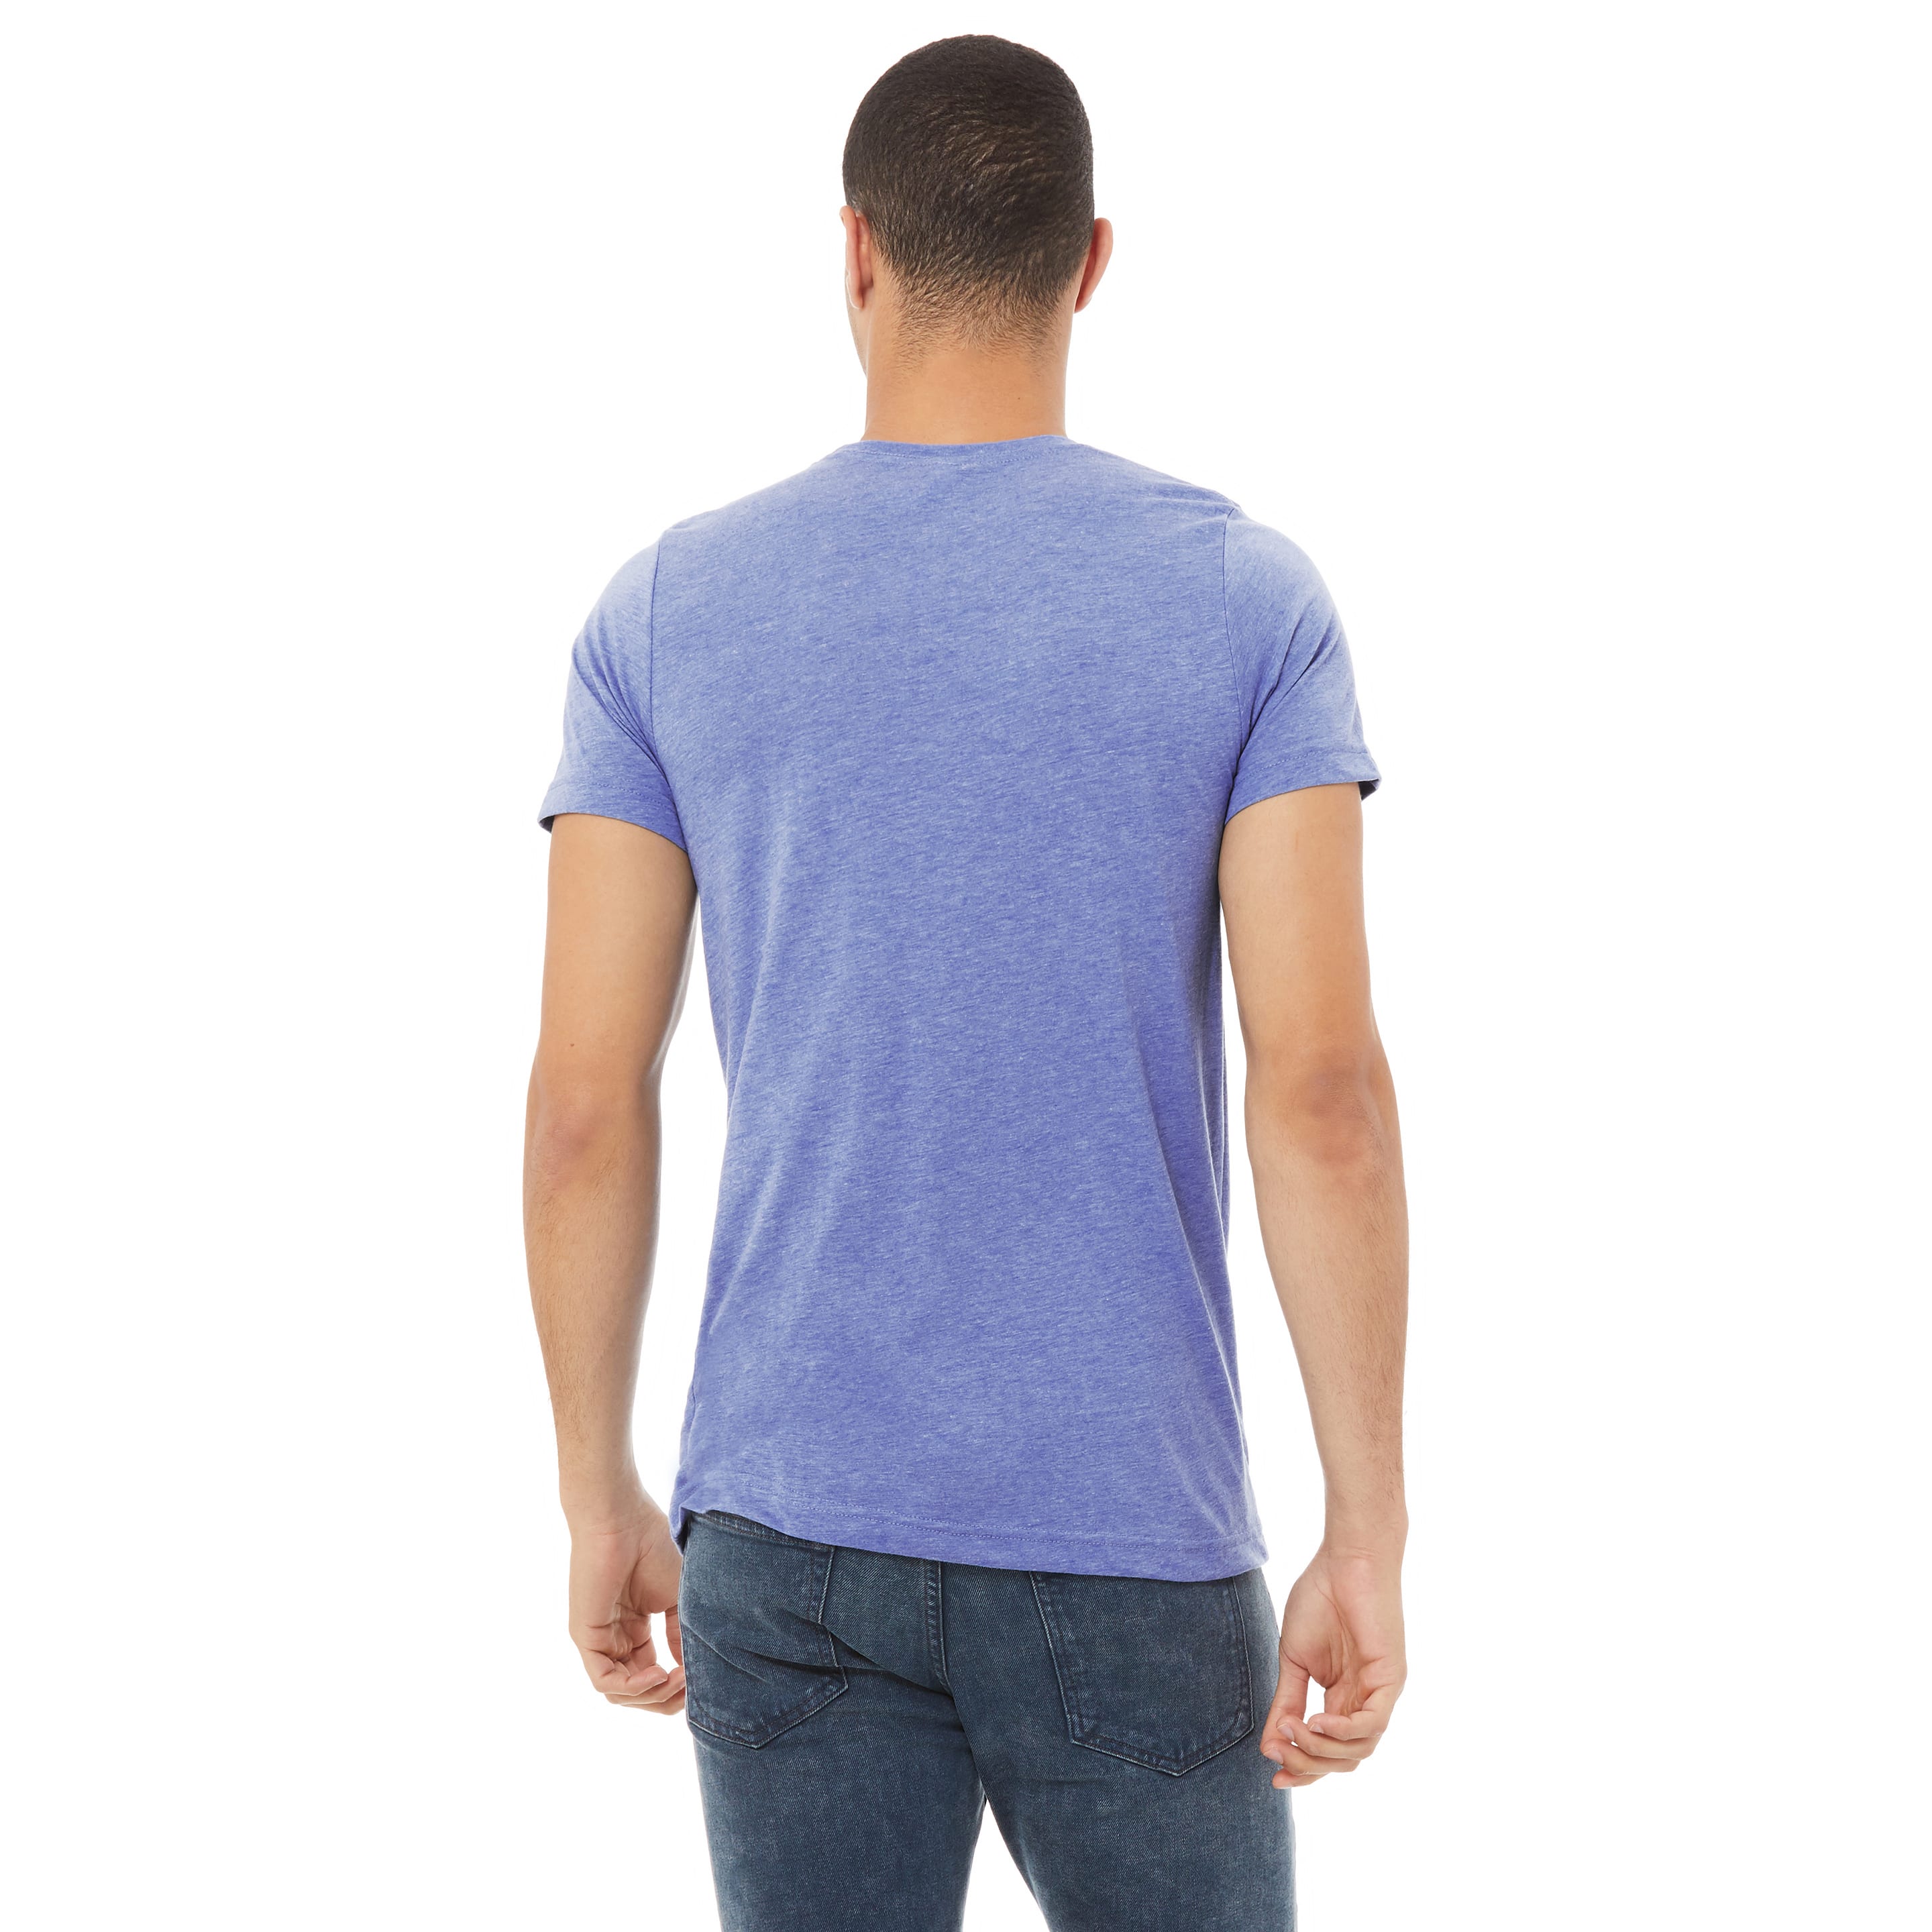 Curbside Clothing Heather Black Triblend - Blank Men's T-Shirt